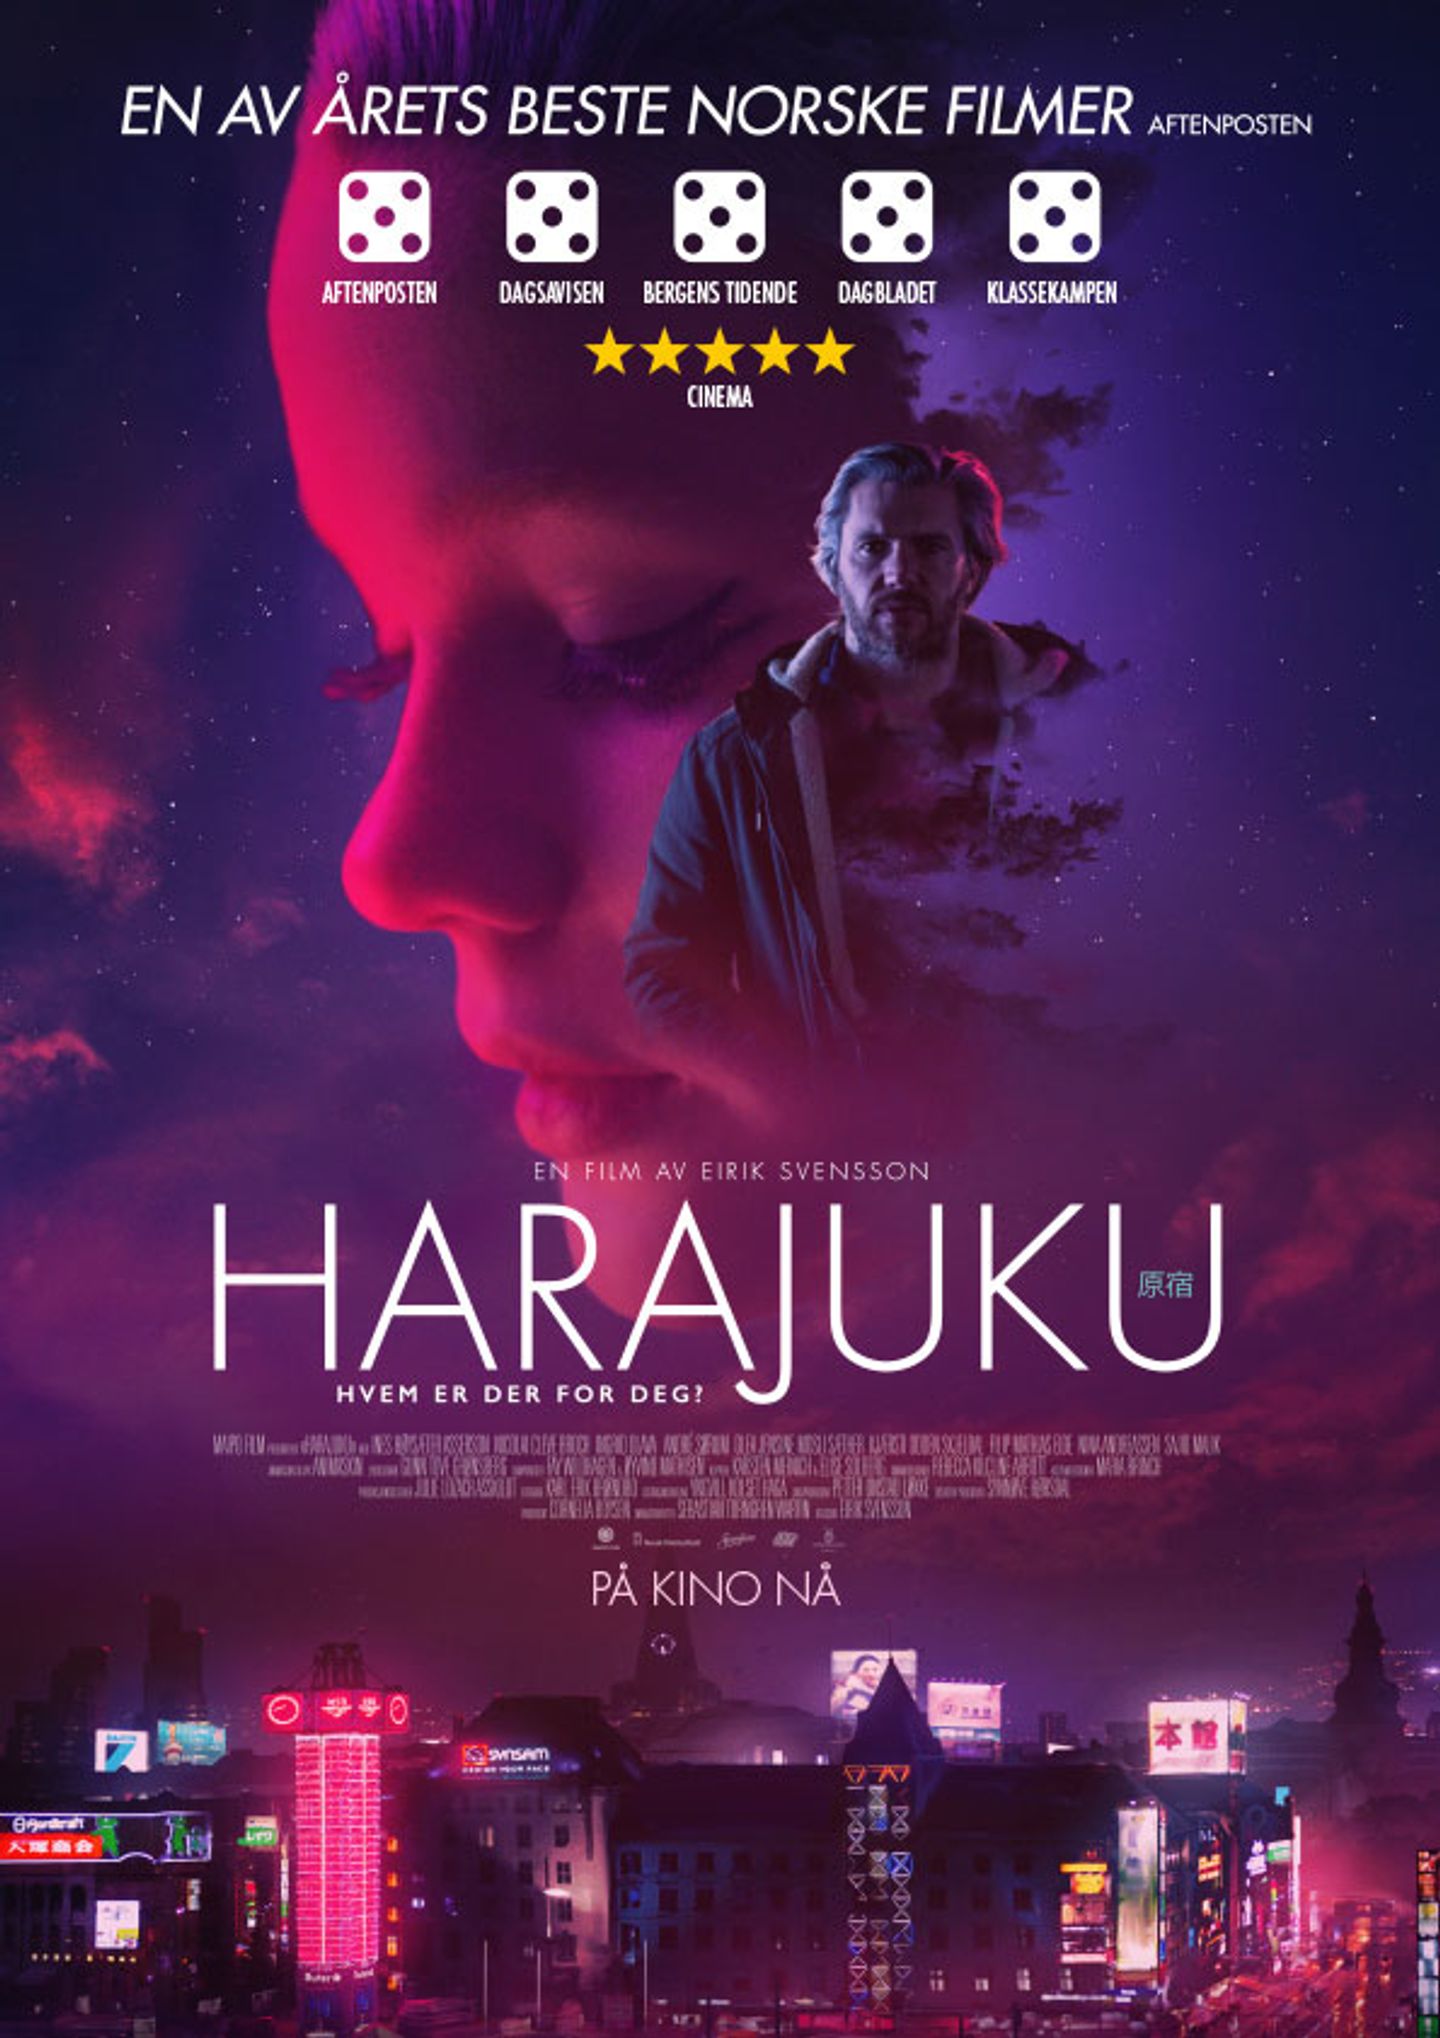 Plakat for 'Harajuku'